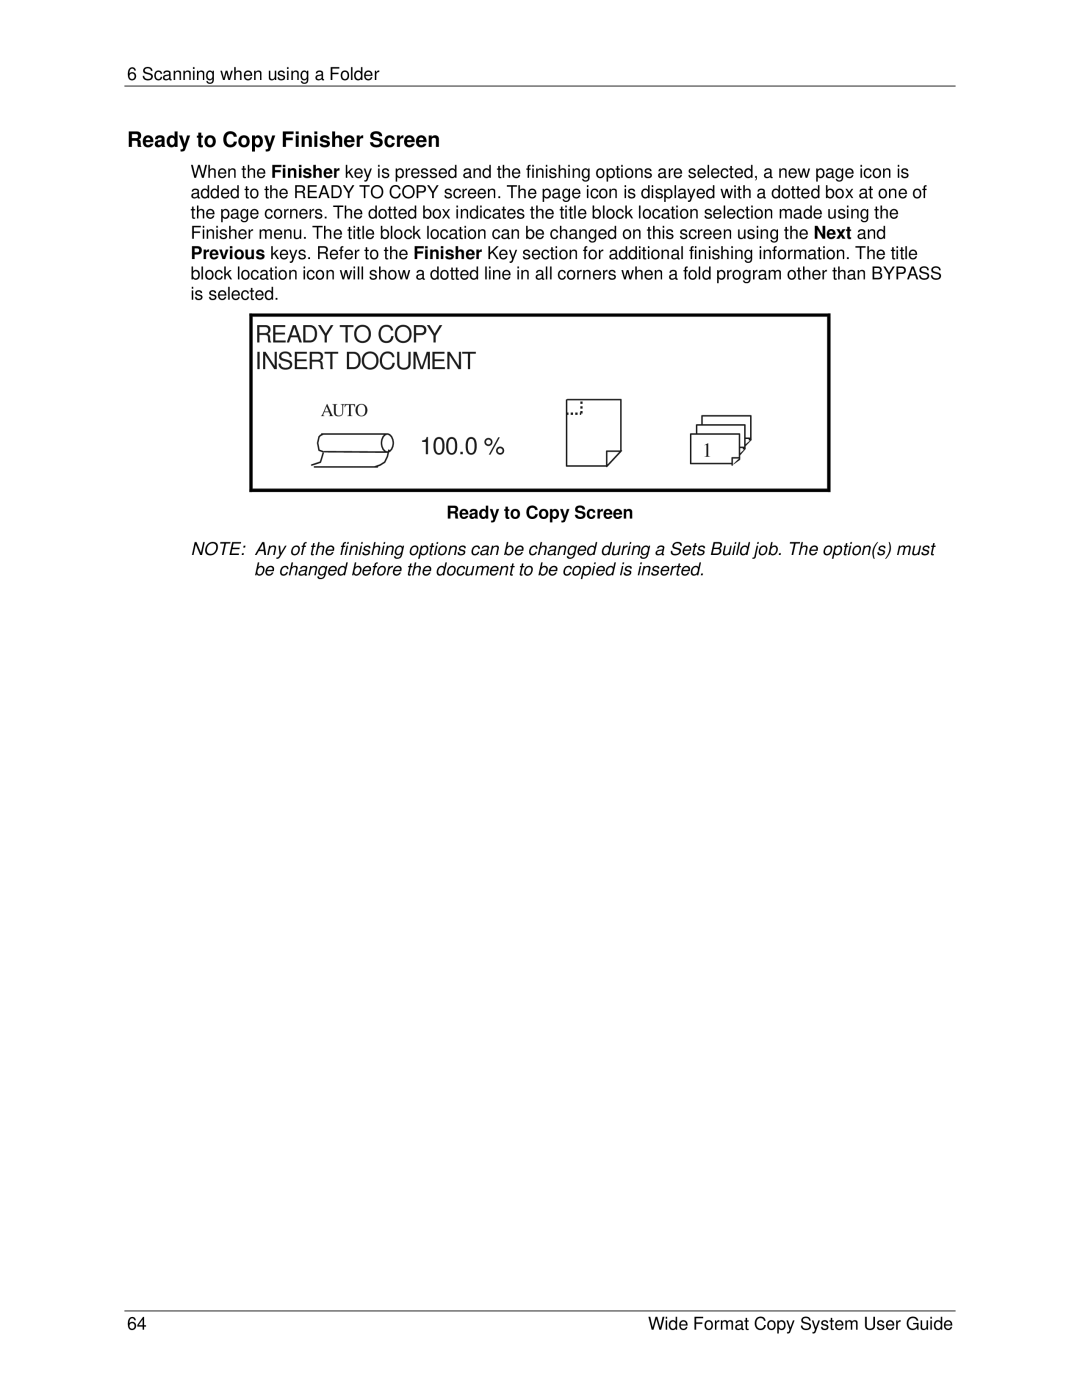 Xerox 6279, 5101 manual Ready to Copy Finisher Screen, Ready to Copy Screen 